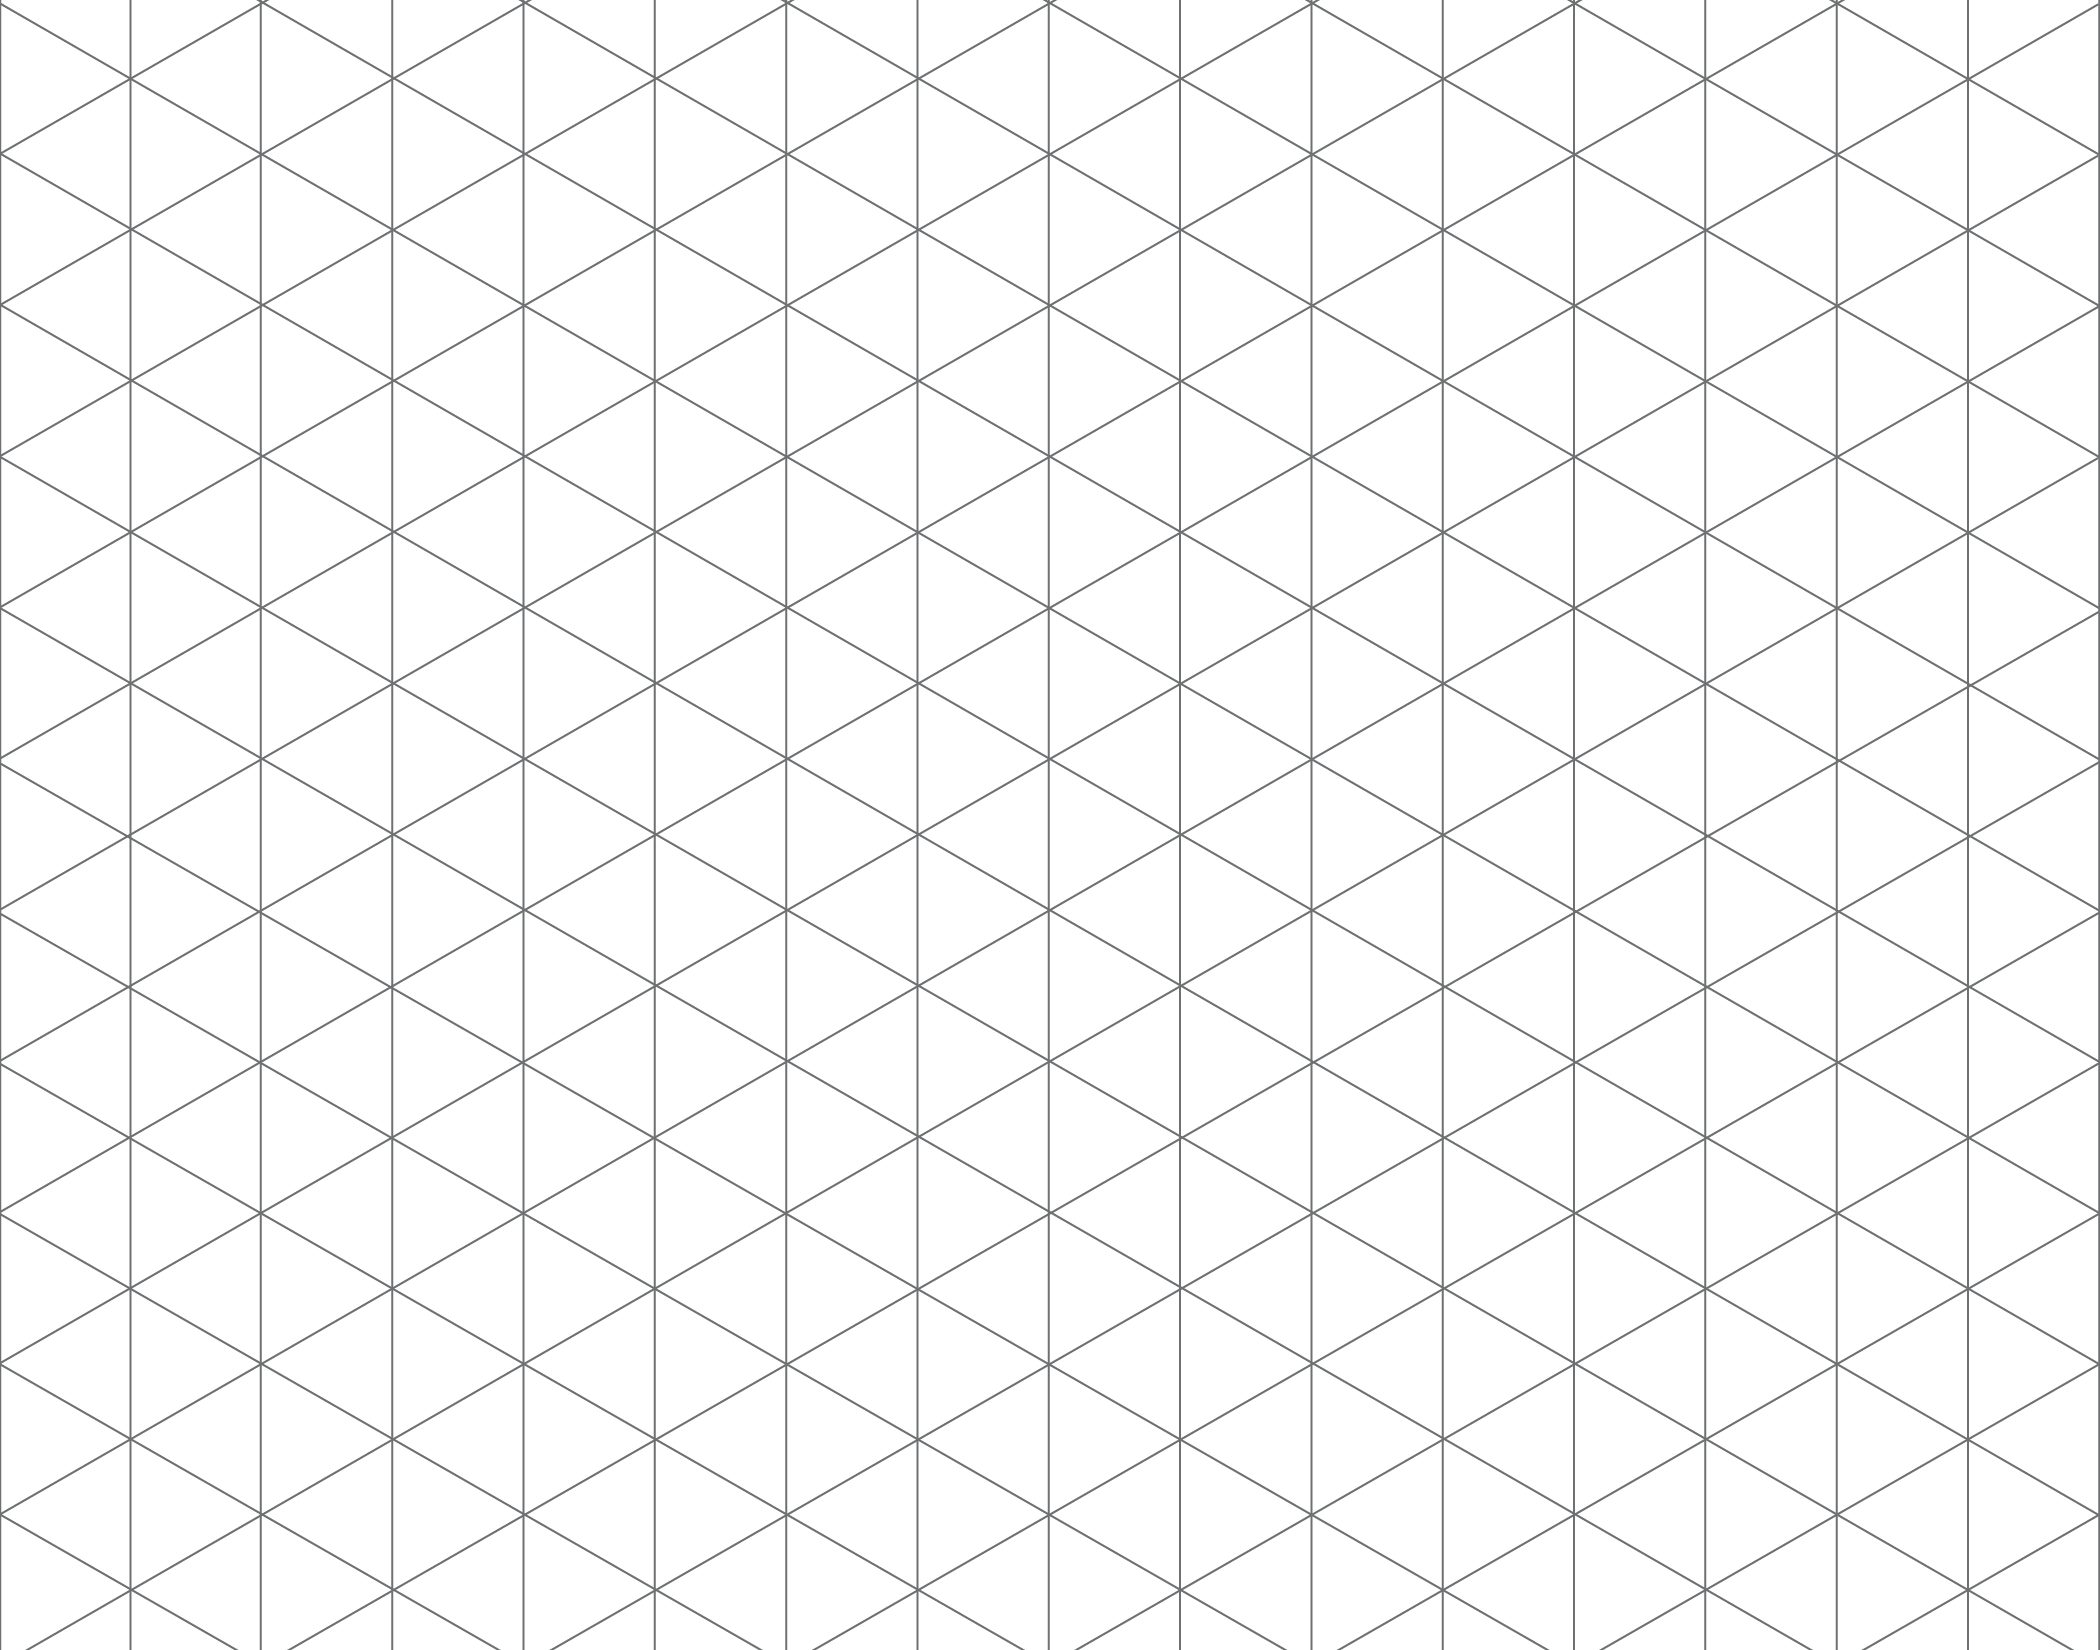 A blank isometric grid.